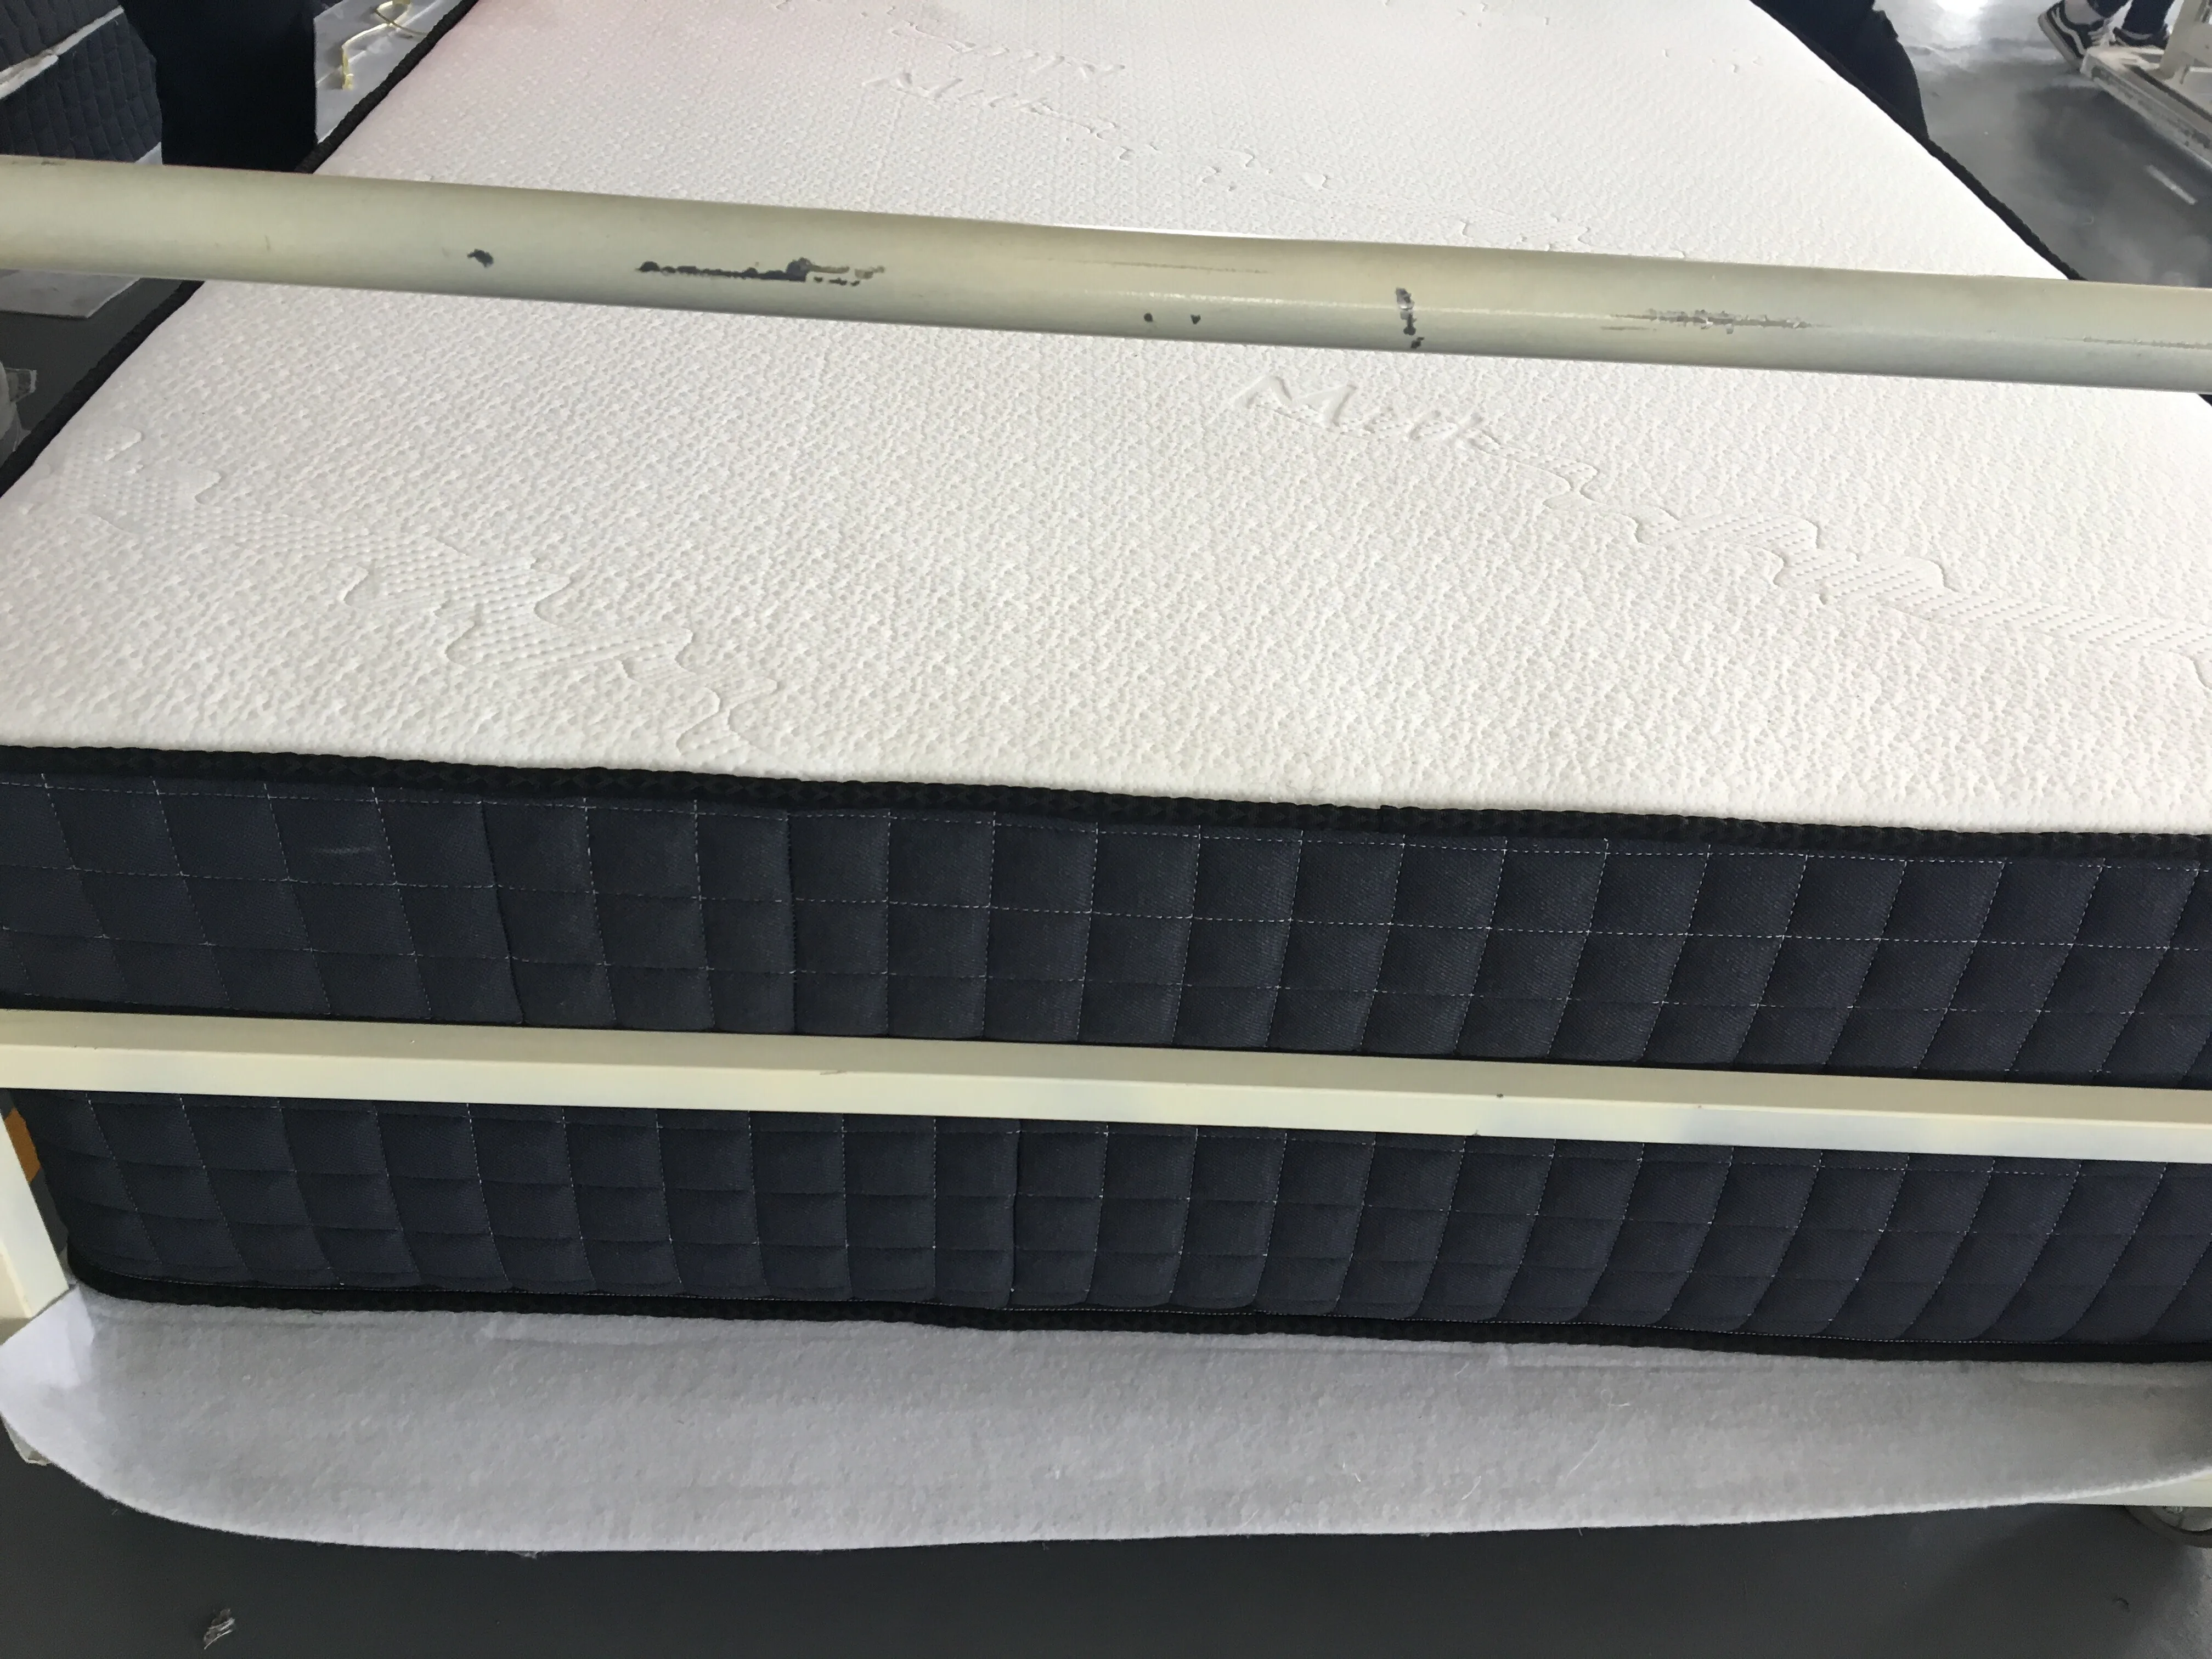 Gel memory foam mattress Comfortable feel foam mattress CertiPUR Certificates washable and removable cover PU foam